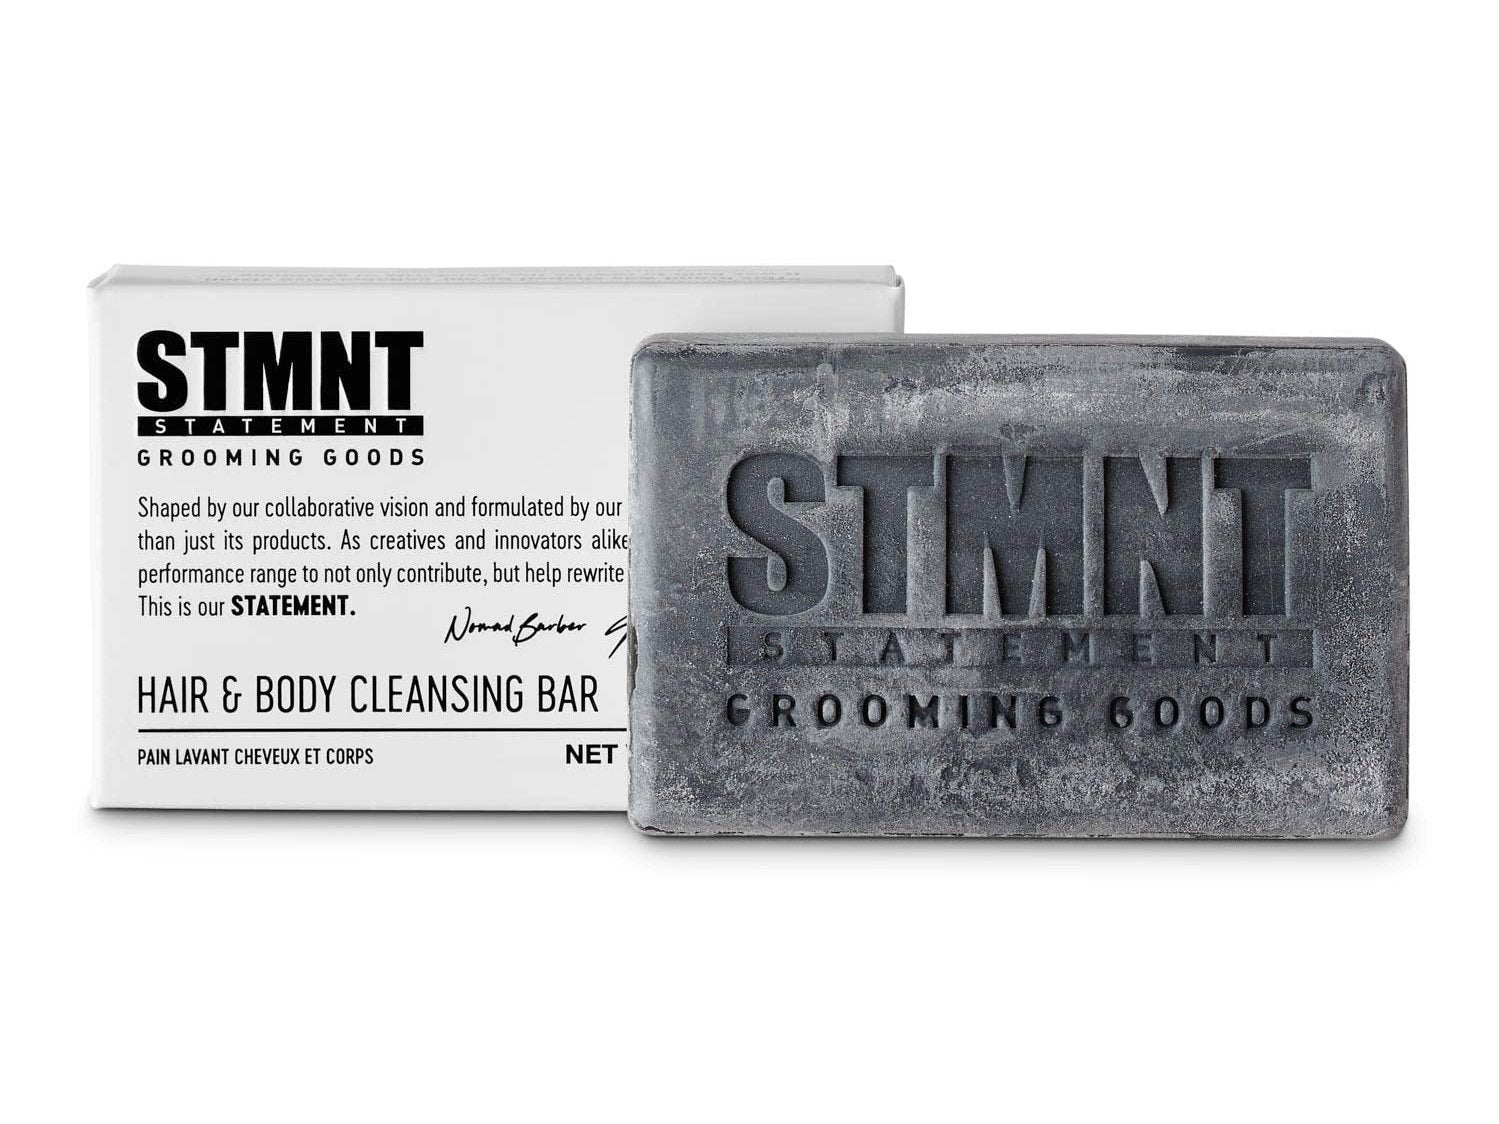 STMNT Hair & Body Cleansing Soap Bar, 4.4 oz.